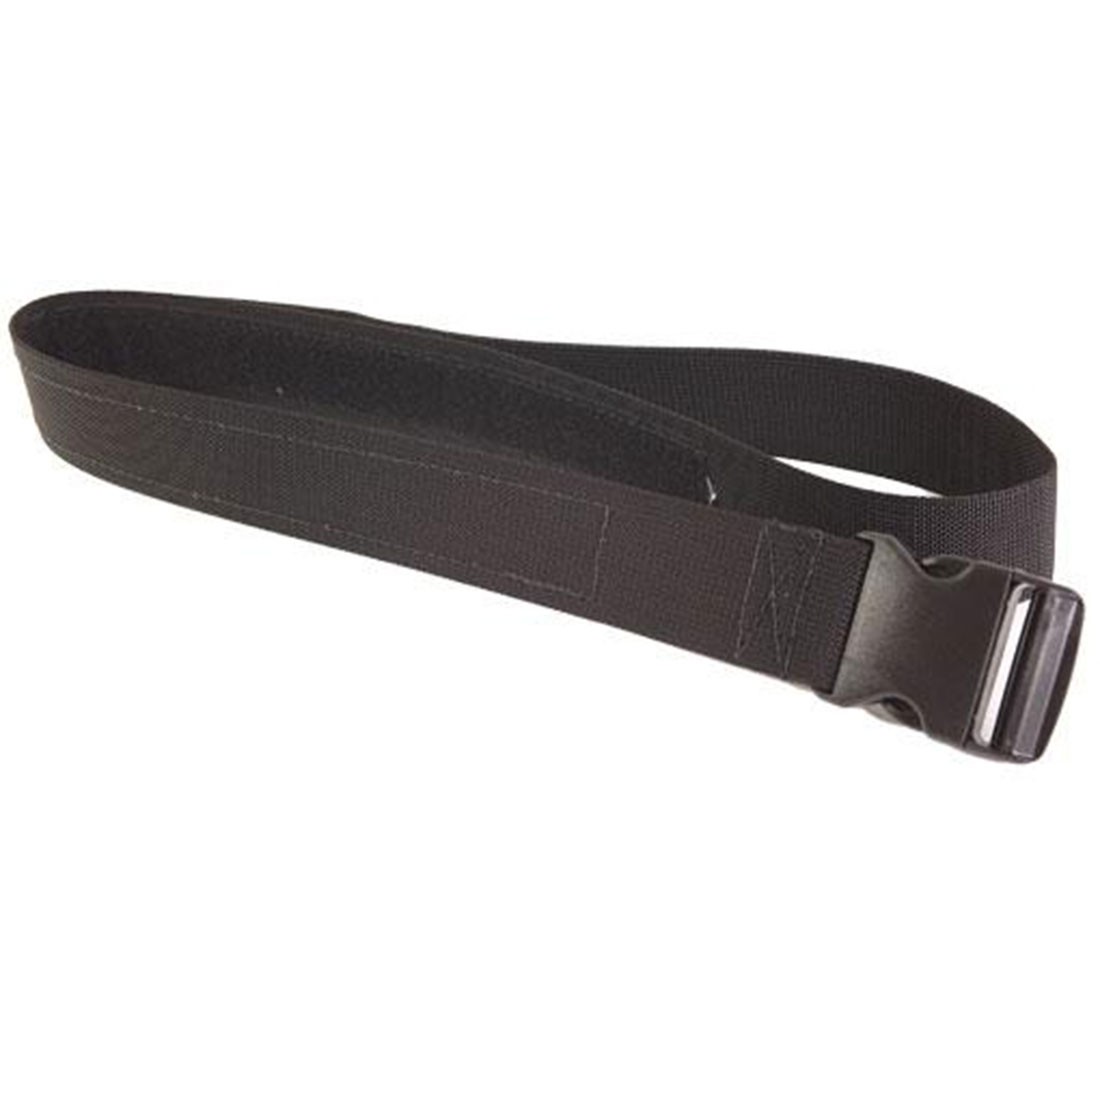 HSGI Duty Belt - M (Black)